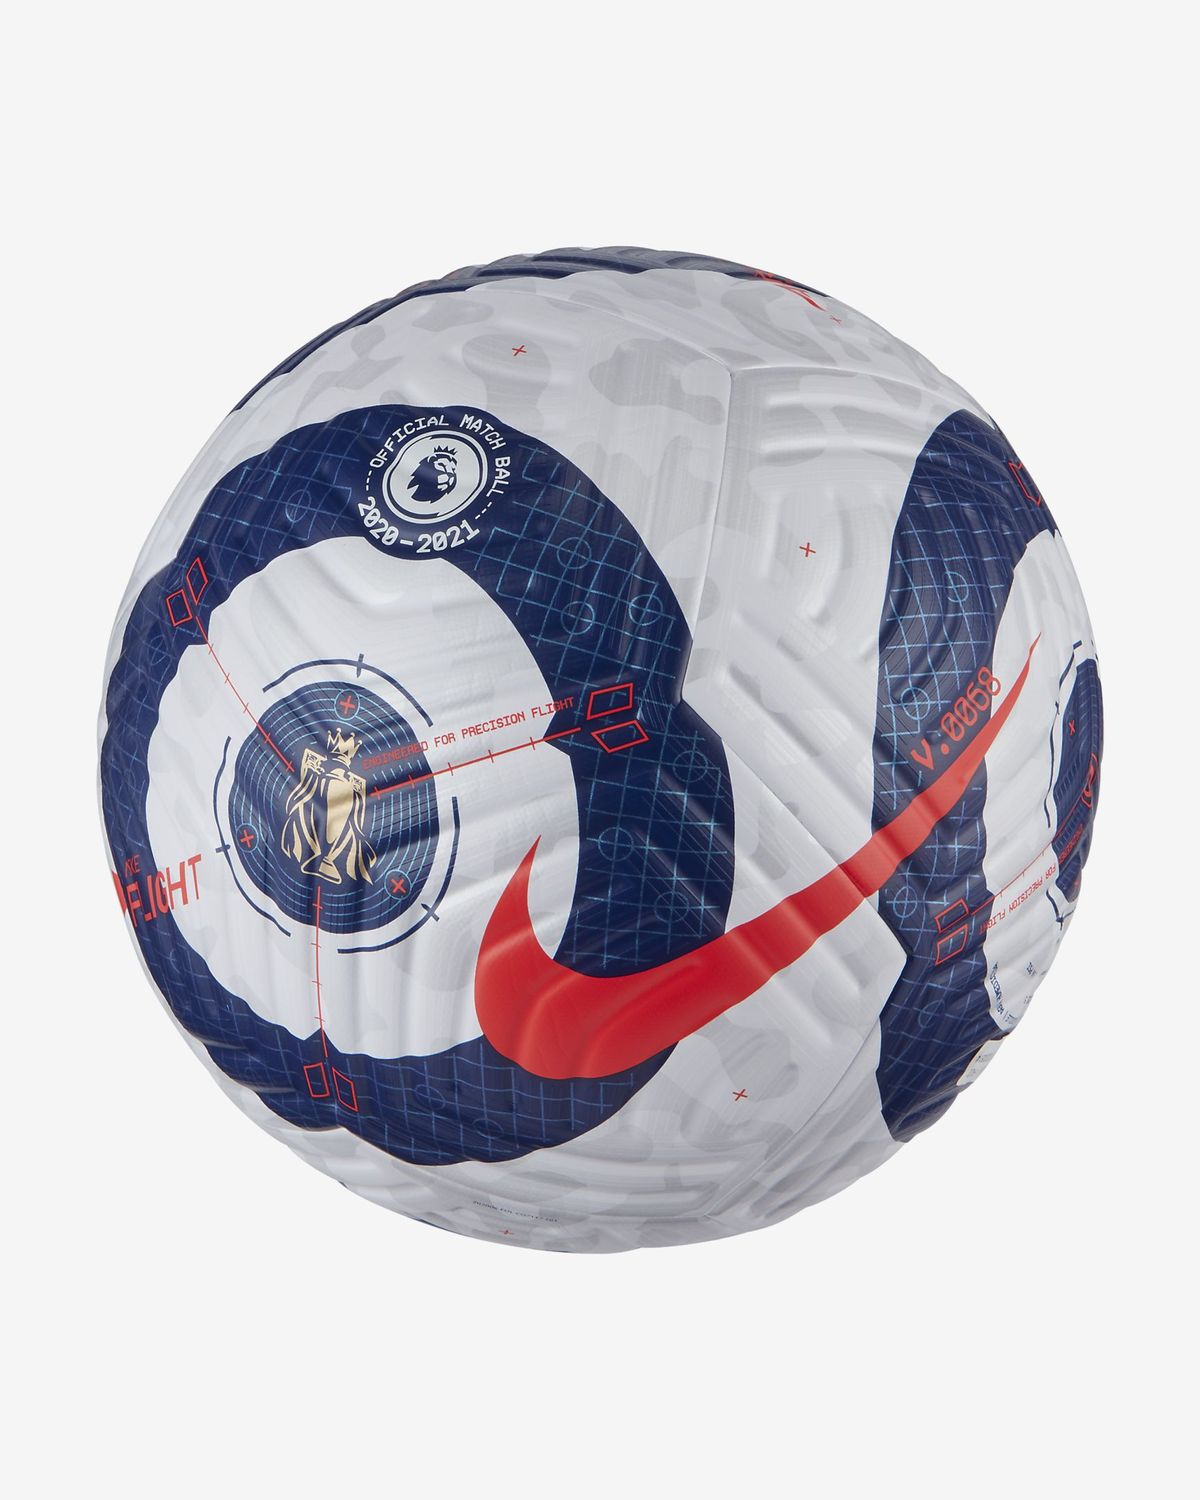 New Premier League ball: Latest Nike 